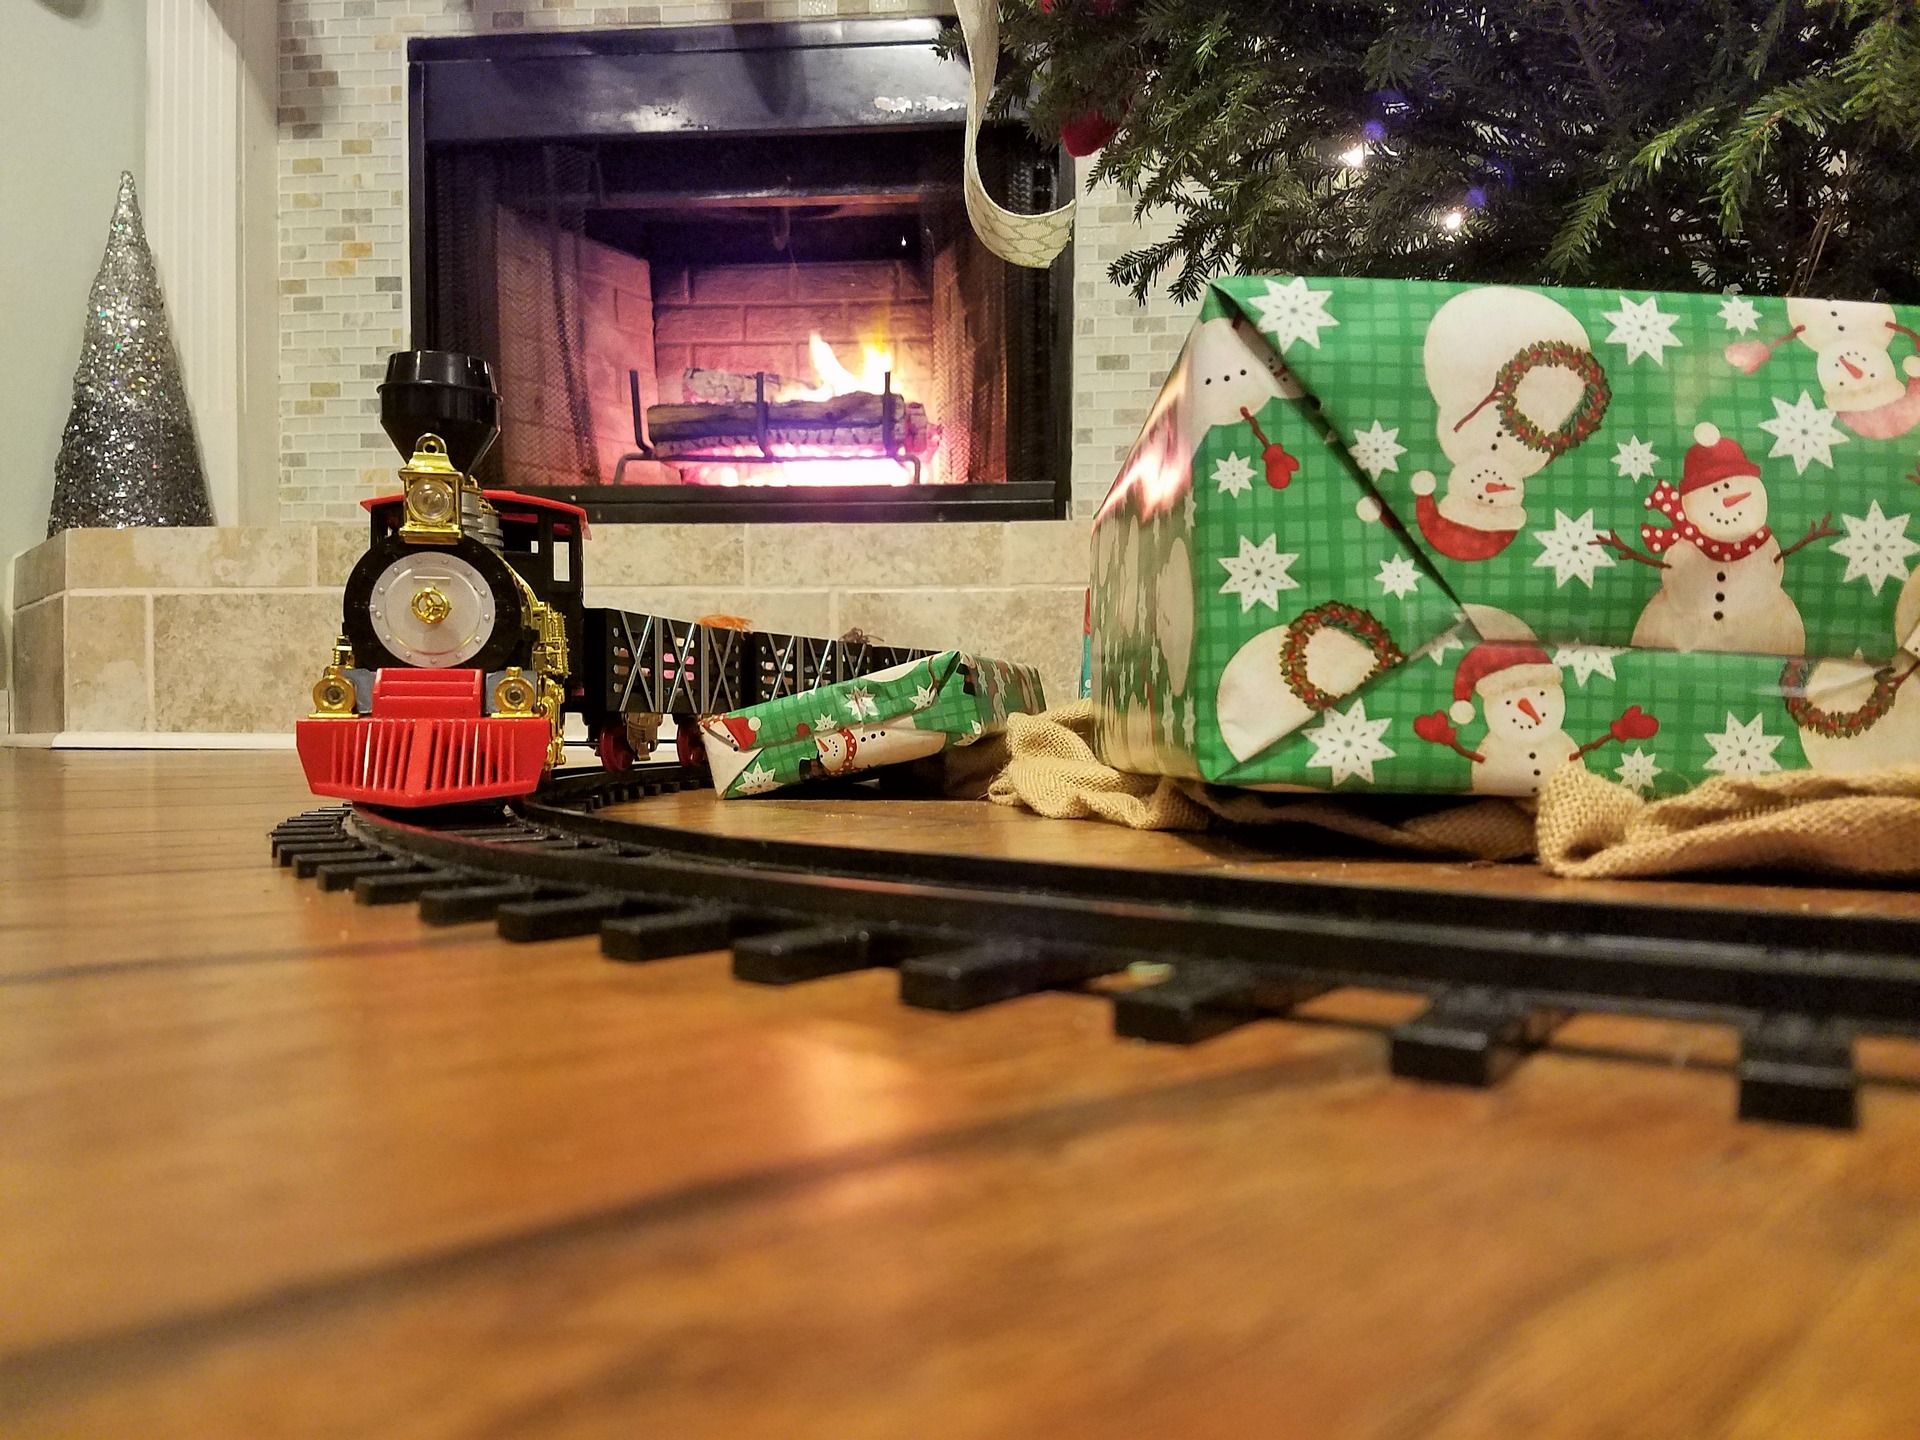 A Lionel train set running around a Christmas tree